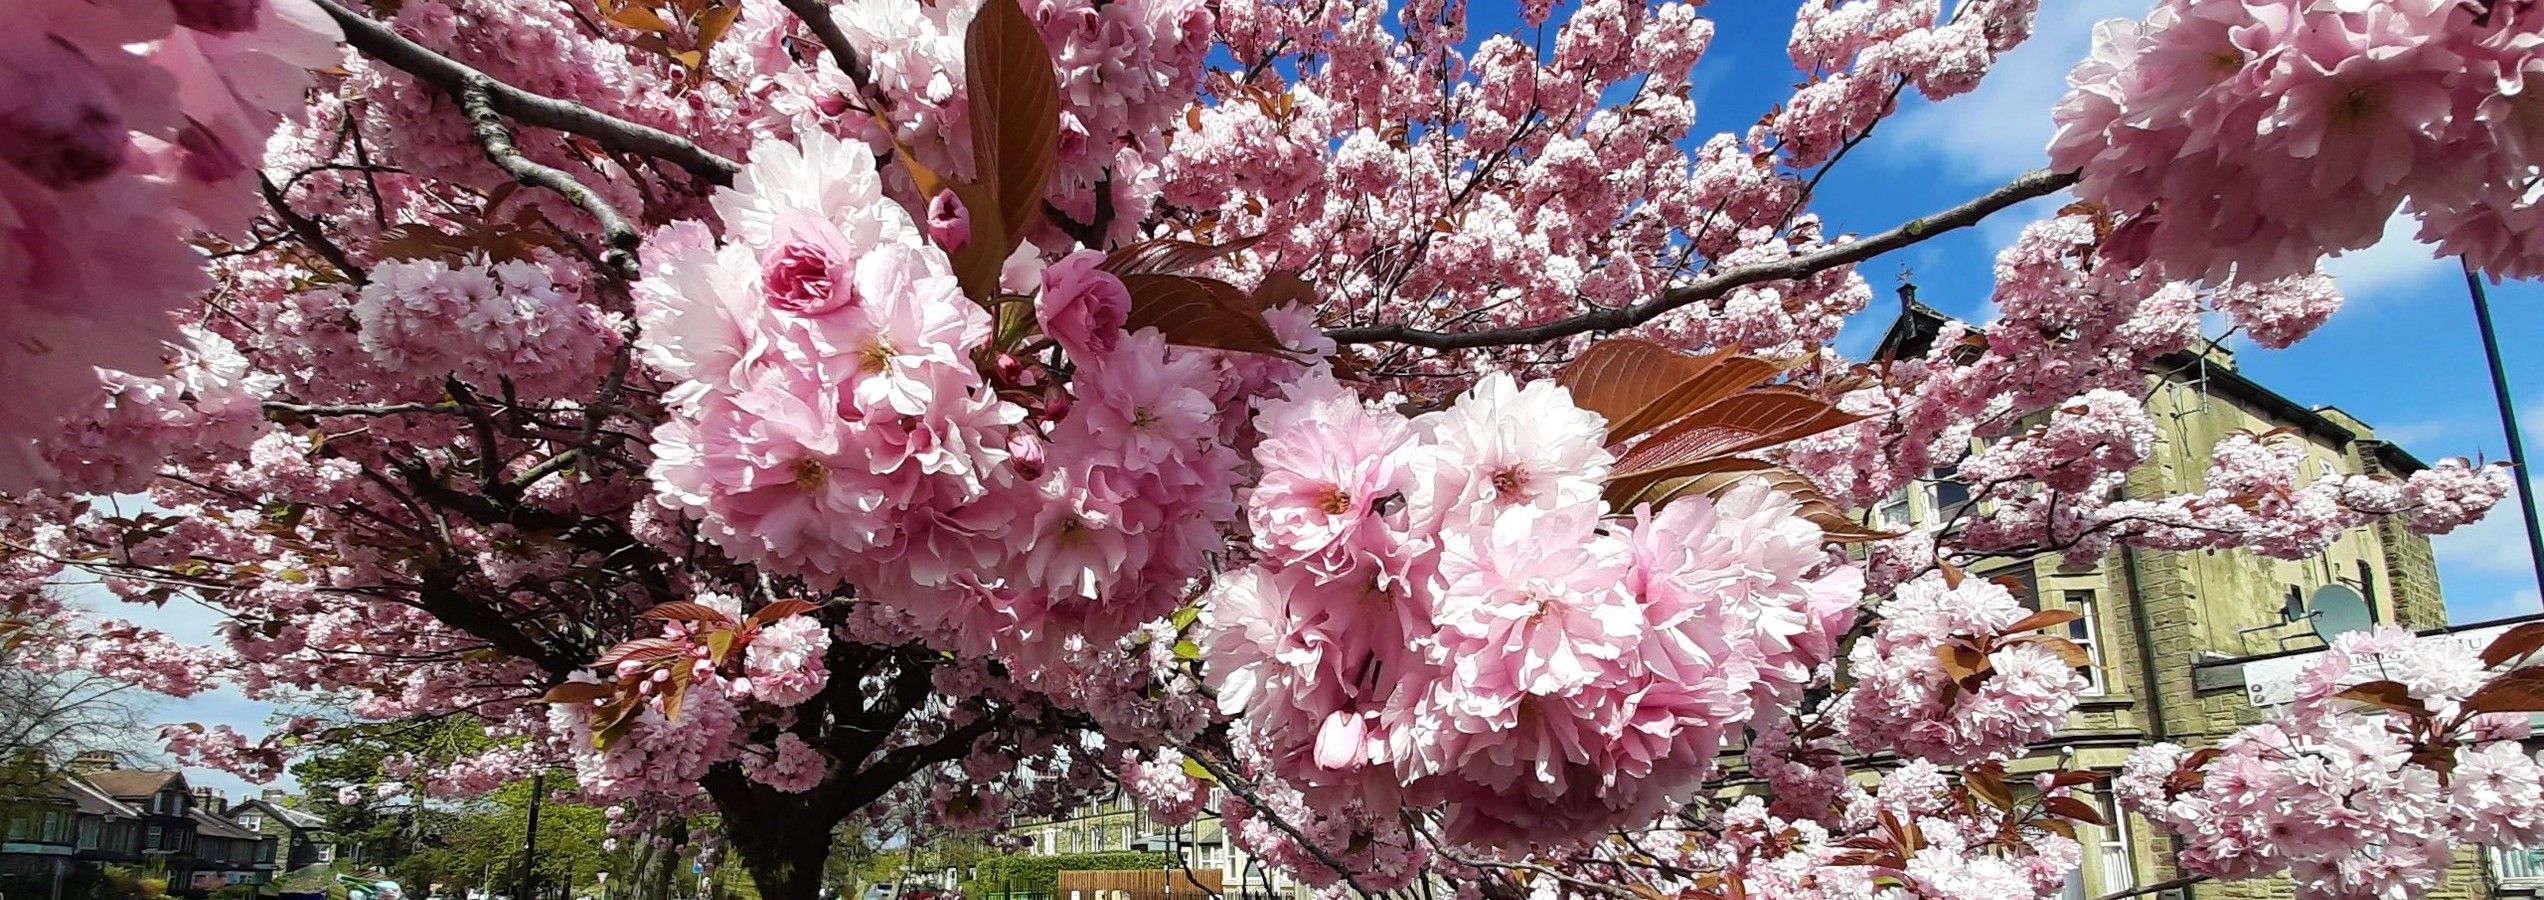 Harrogate Blossoms